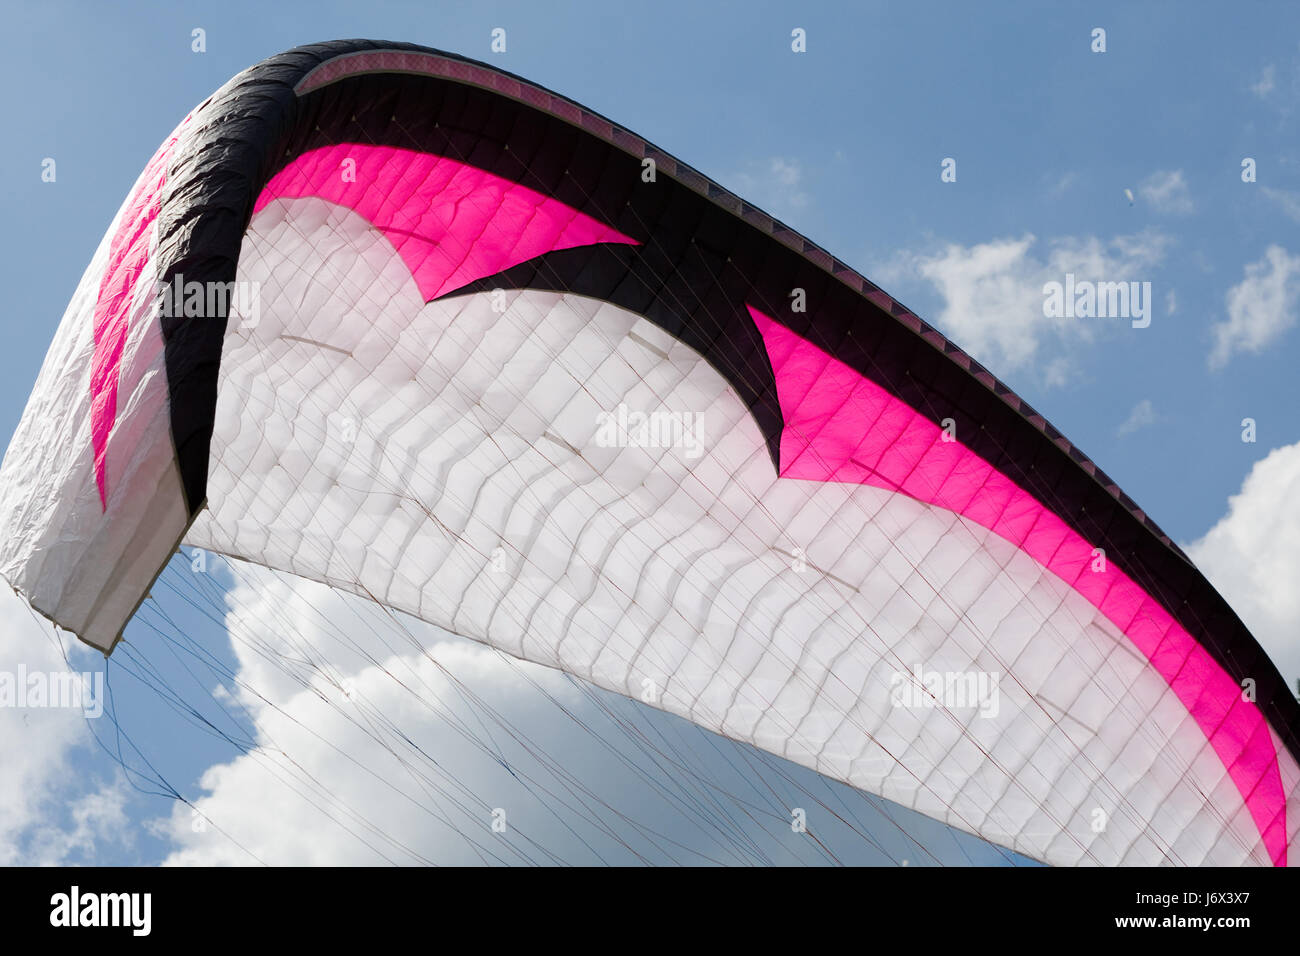 paraglider Stock Photo